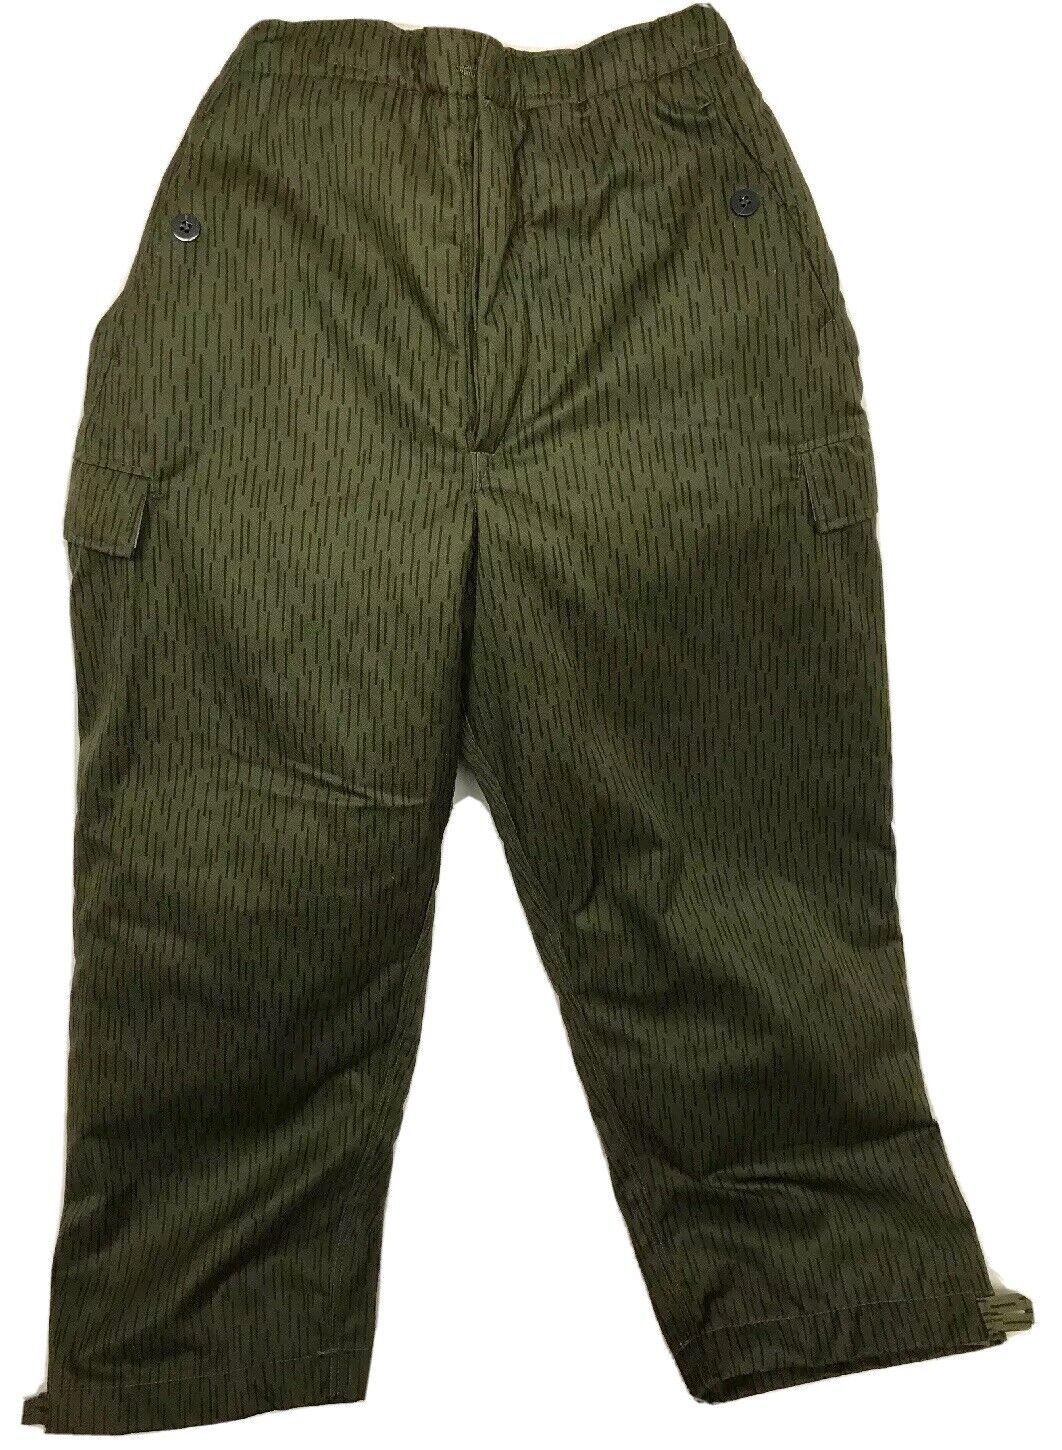 Rare East German Rain Camouflage Pants Military Insulated K44 Nice